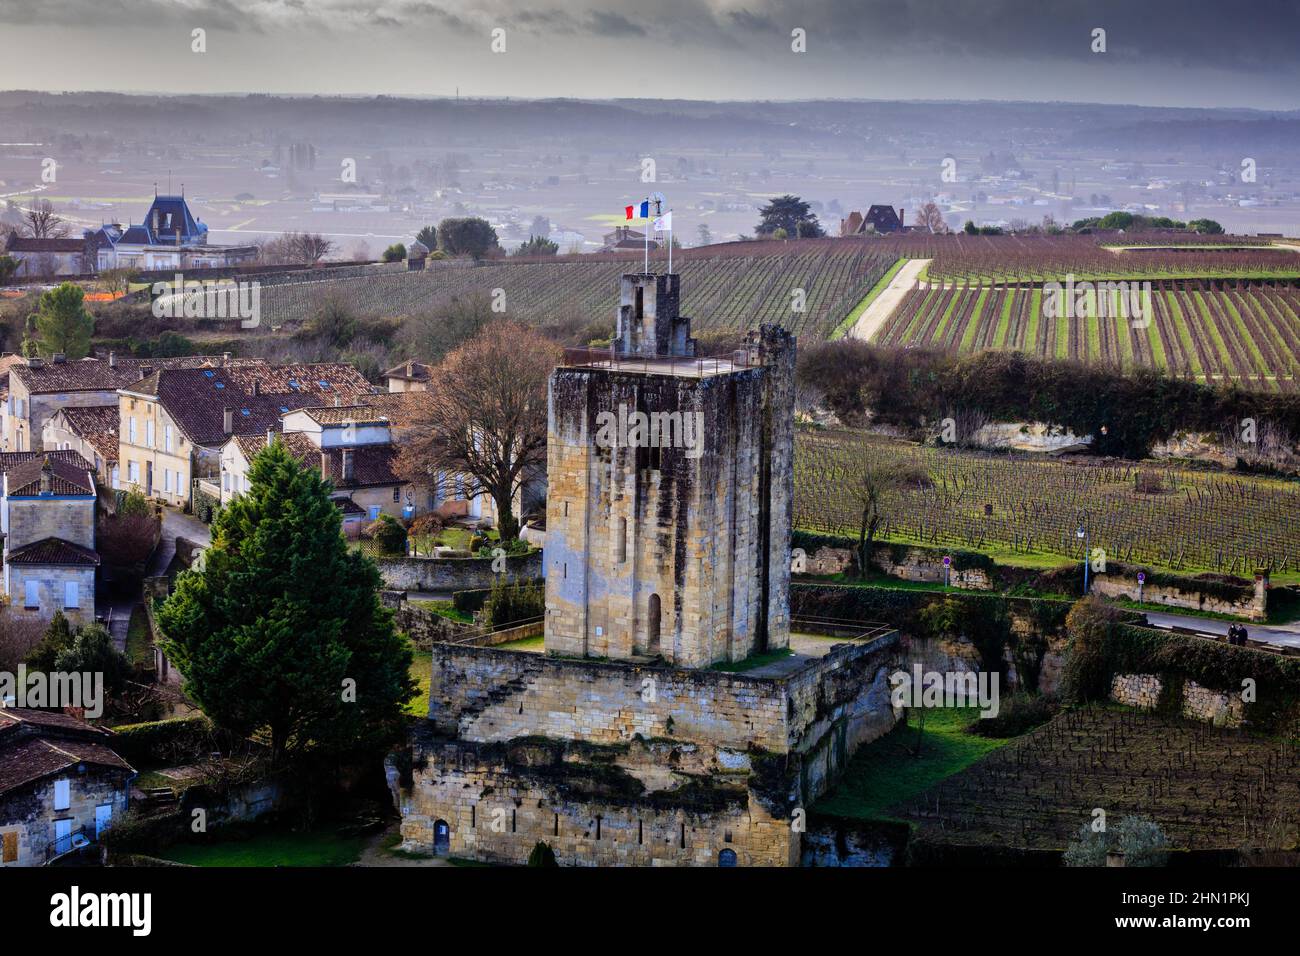 Castle of Saint Emilion, a medieval village in the Bordeaux area, surrounded by vineyards. Stock Photo